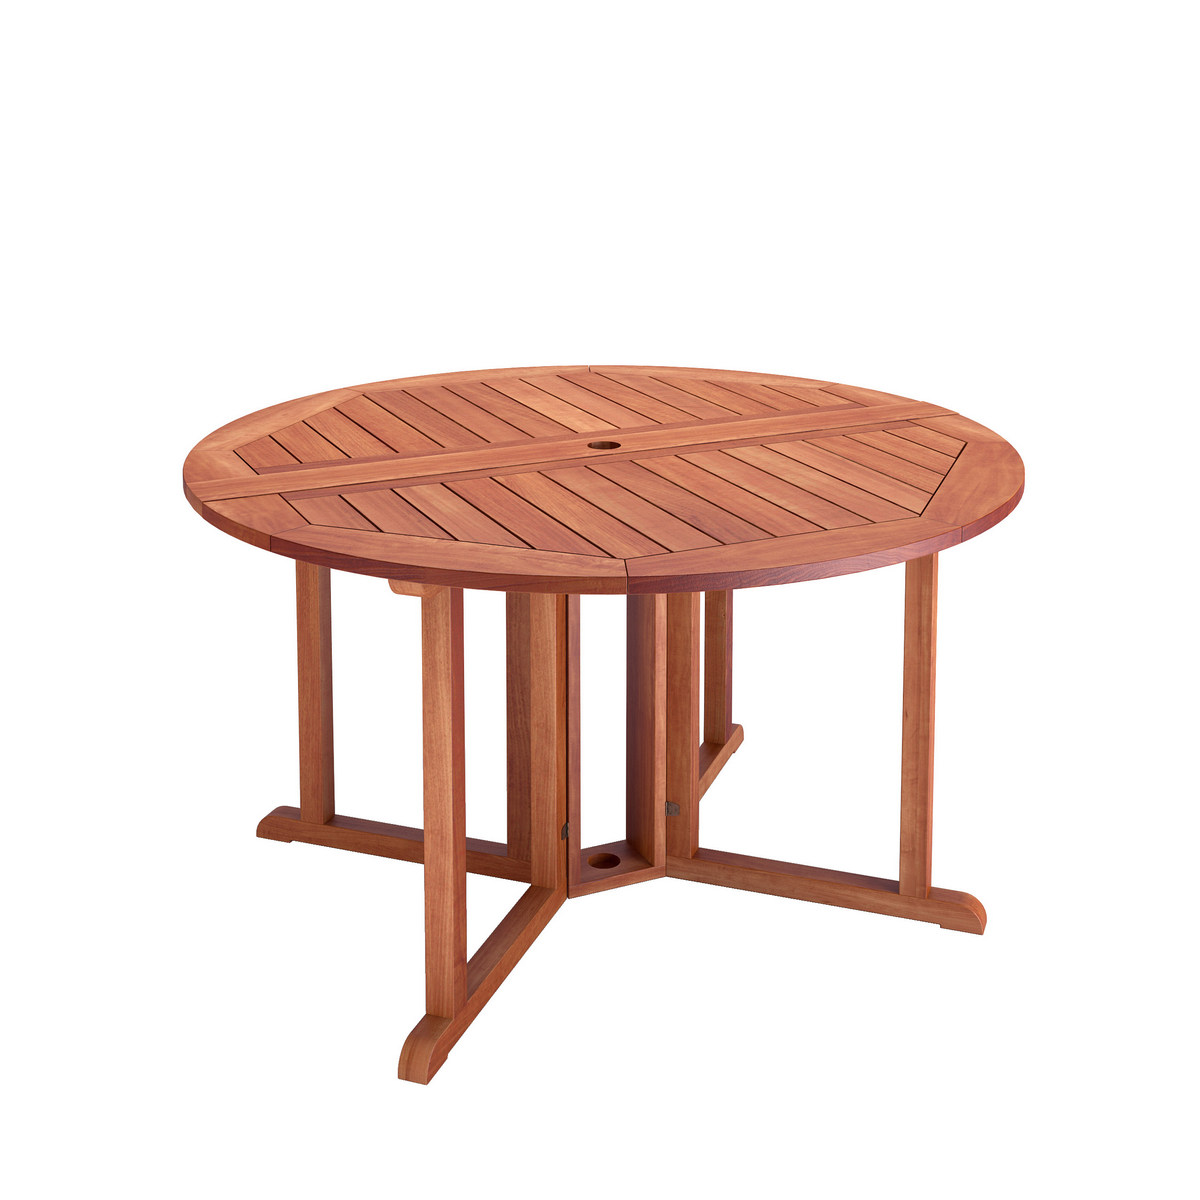 Corliving Pex-369-t Miramar Cinnamon Brown Hardwood Outdoor Drop Leaf Dining Table